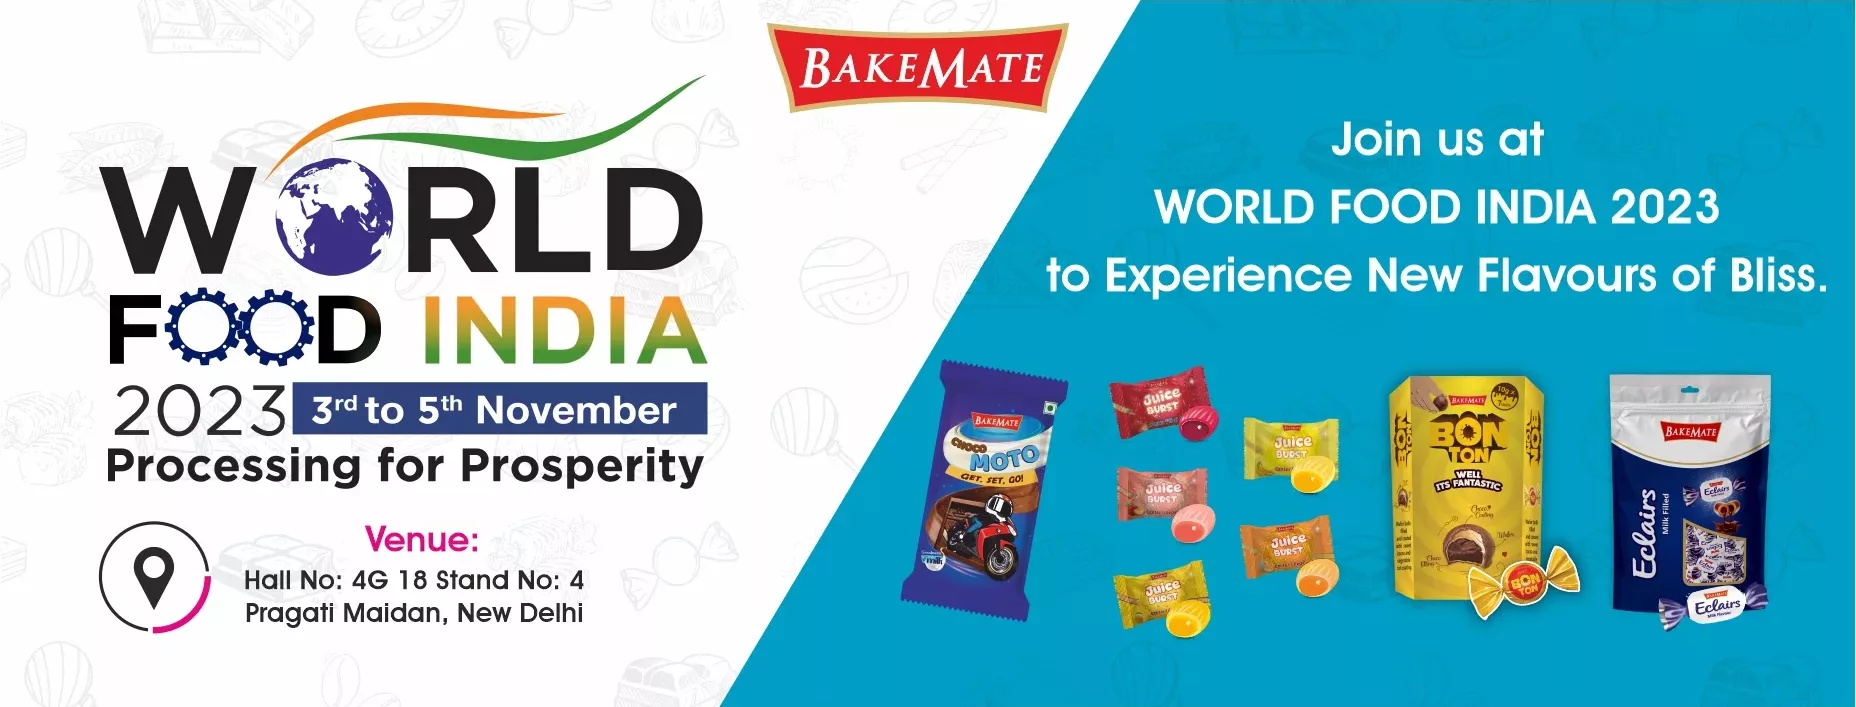 world food India 2023 | ficci | Food expo | Bakemate | WFI 2023 | b2b | exhibition 2023 | Delhi expo | India expo | connections | India | World | Food | trade fair | Food industry |international expo | Ficci 2023 | Live expo | LIVE EXHIBITION | live | Delhi live |